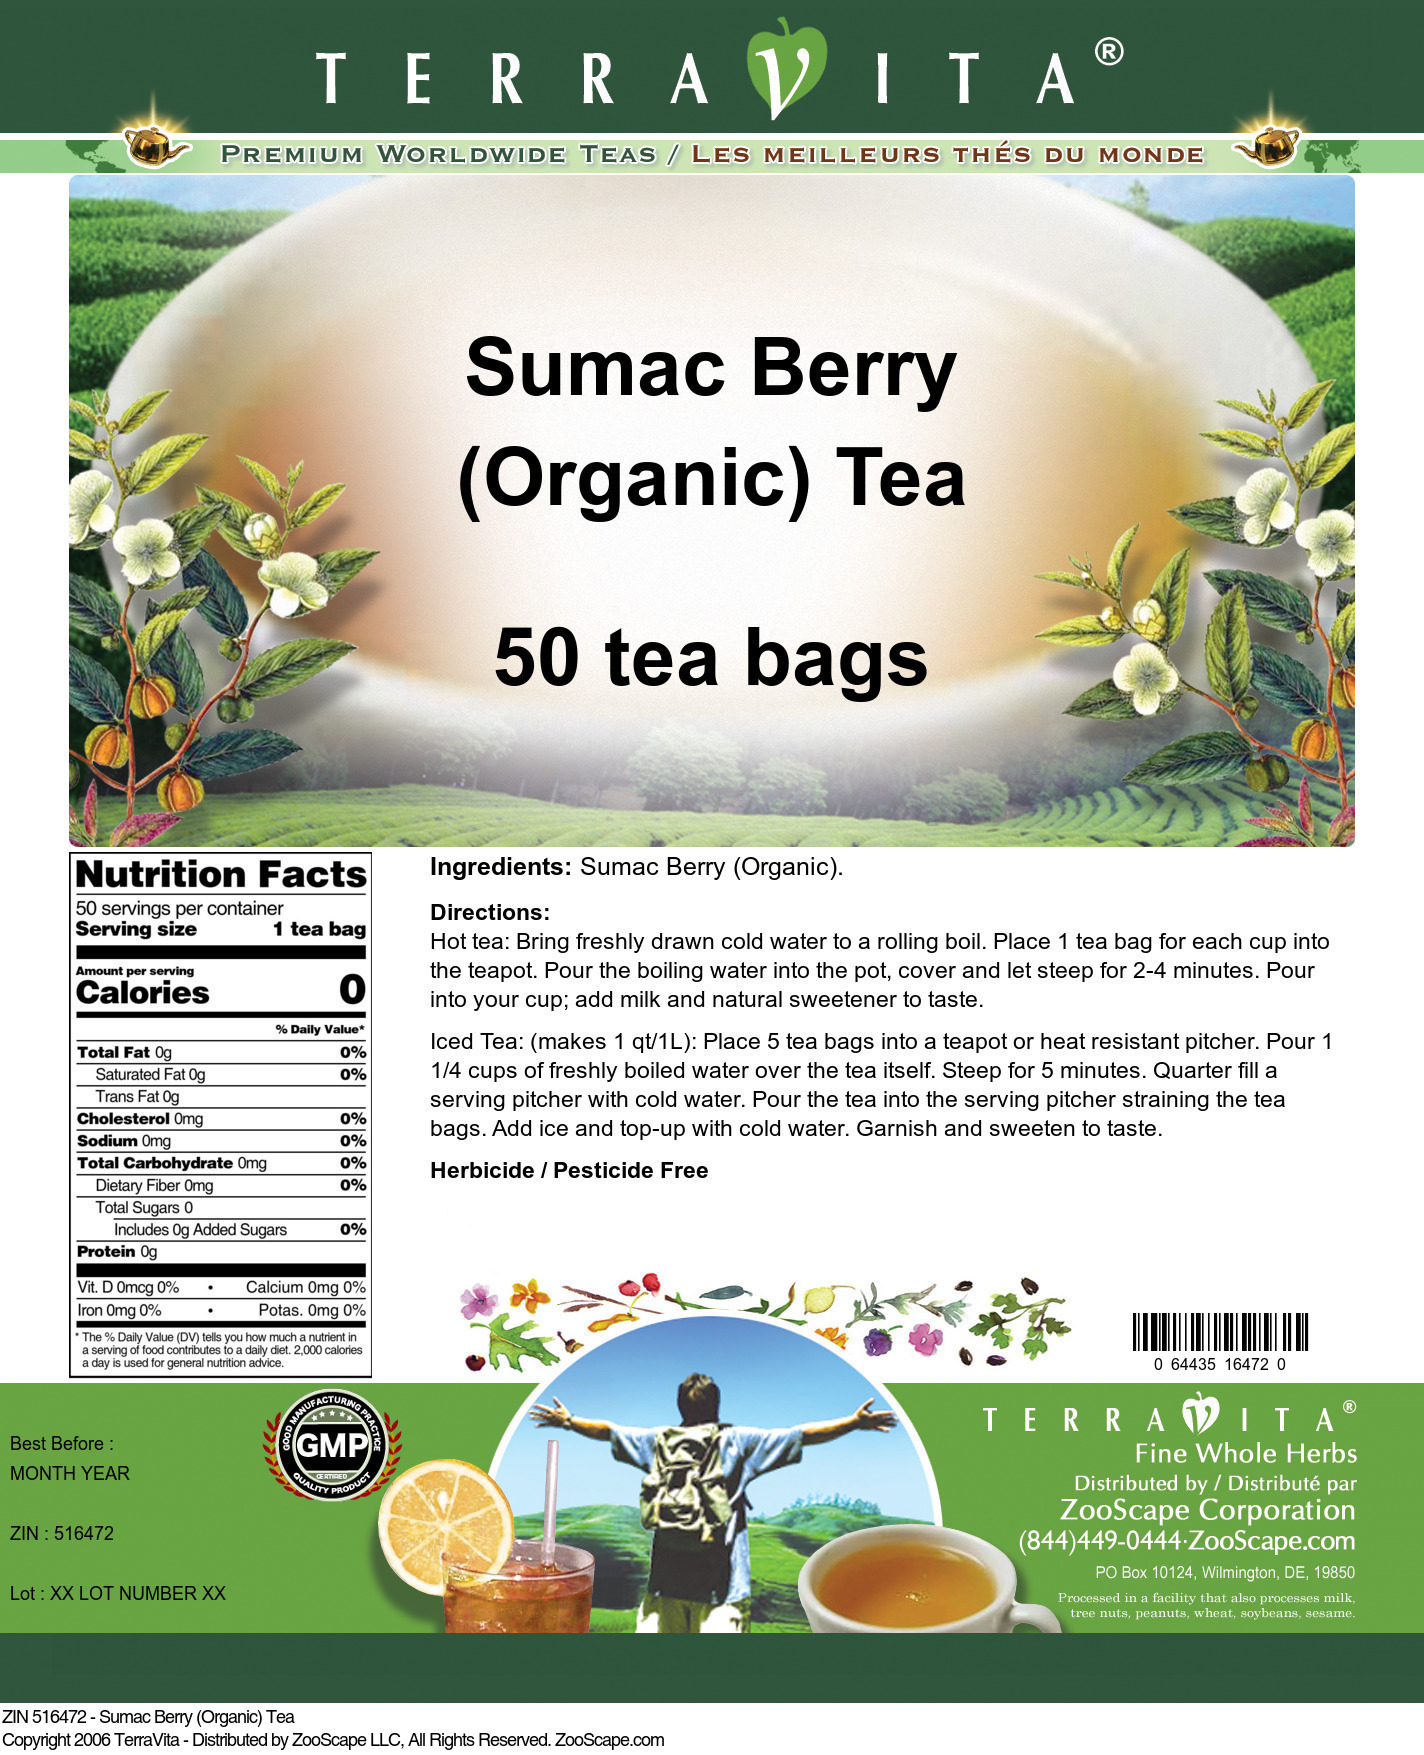 Sumac Berry (Organic) Tea - Label